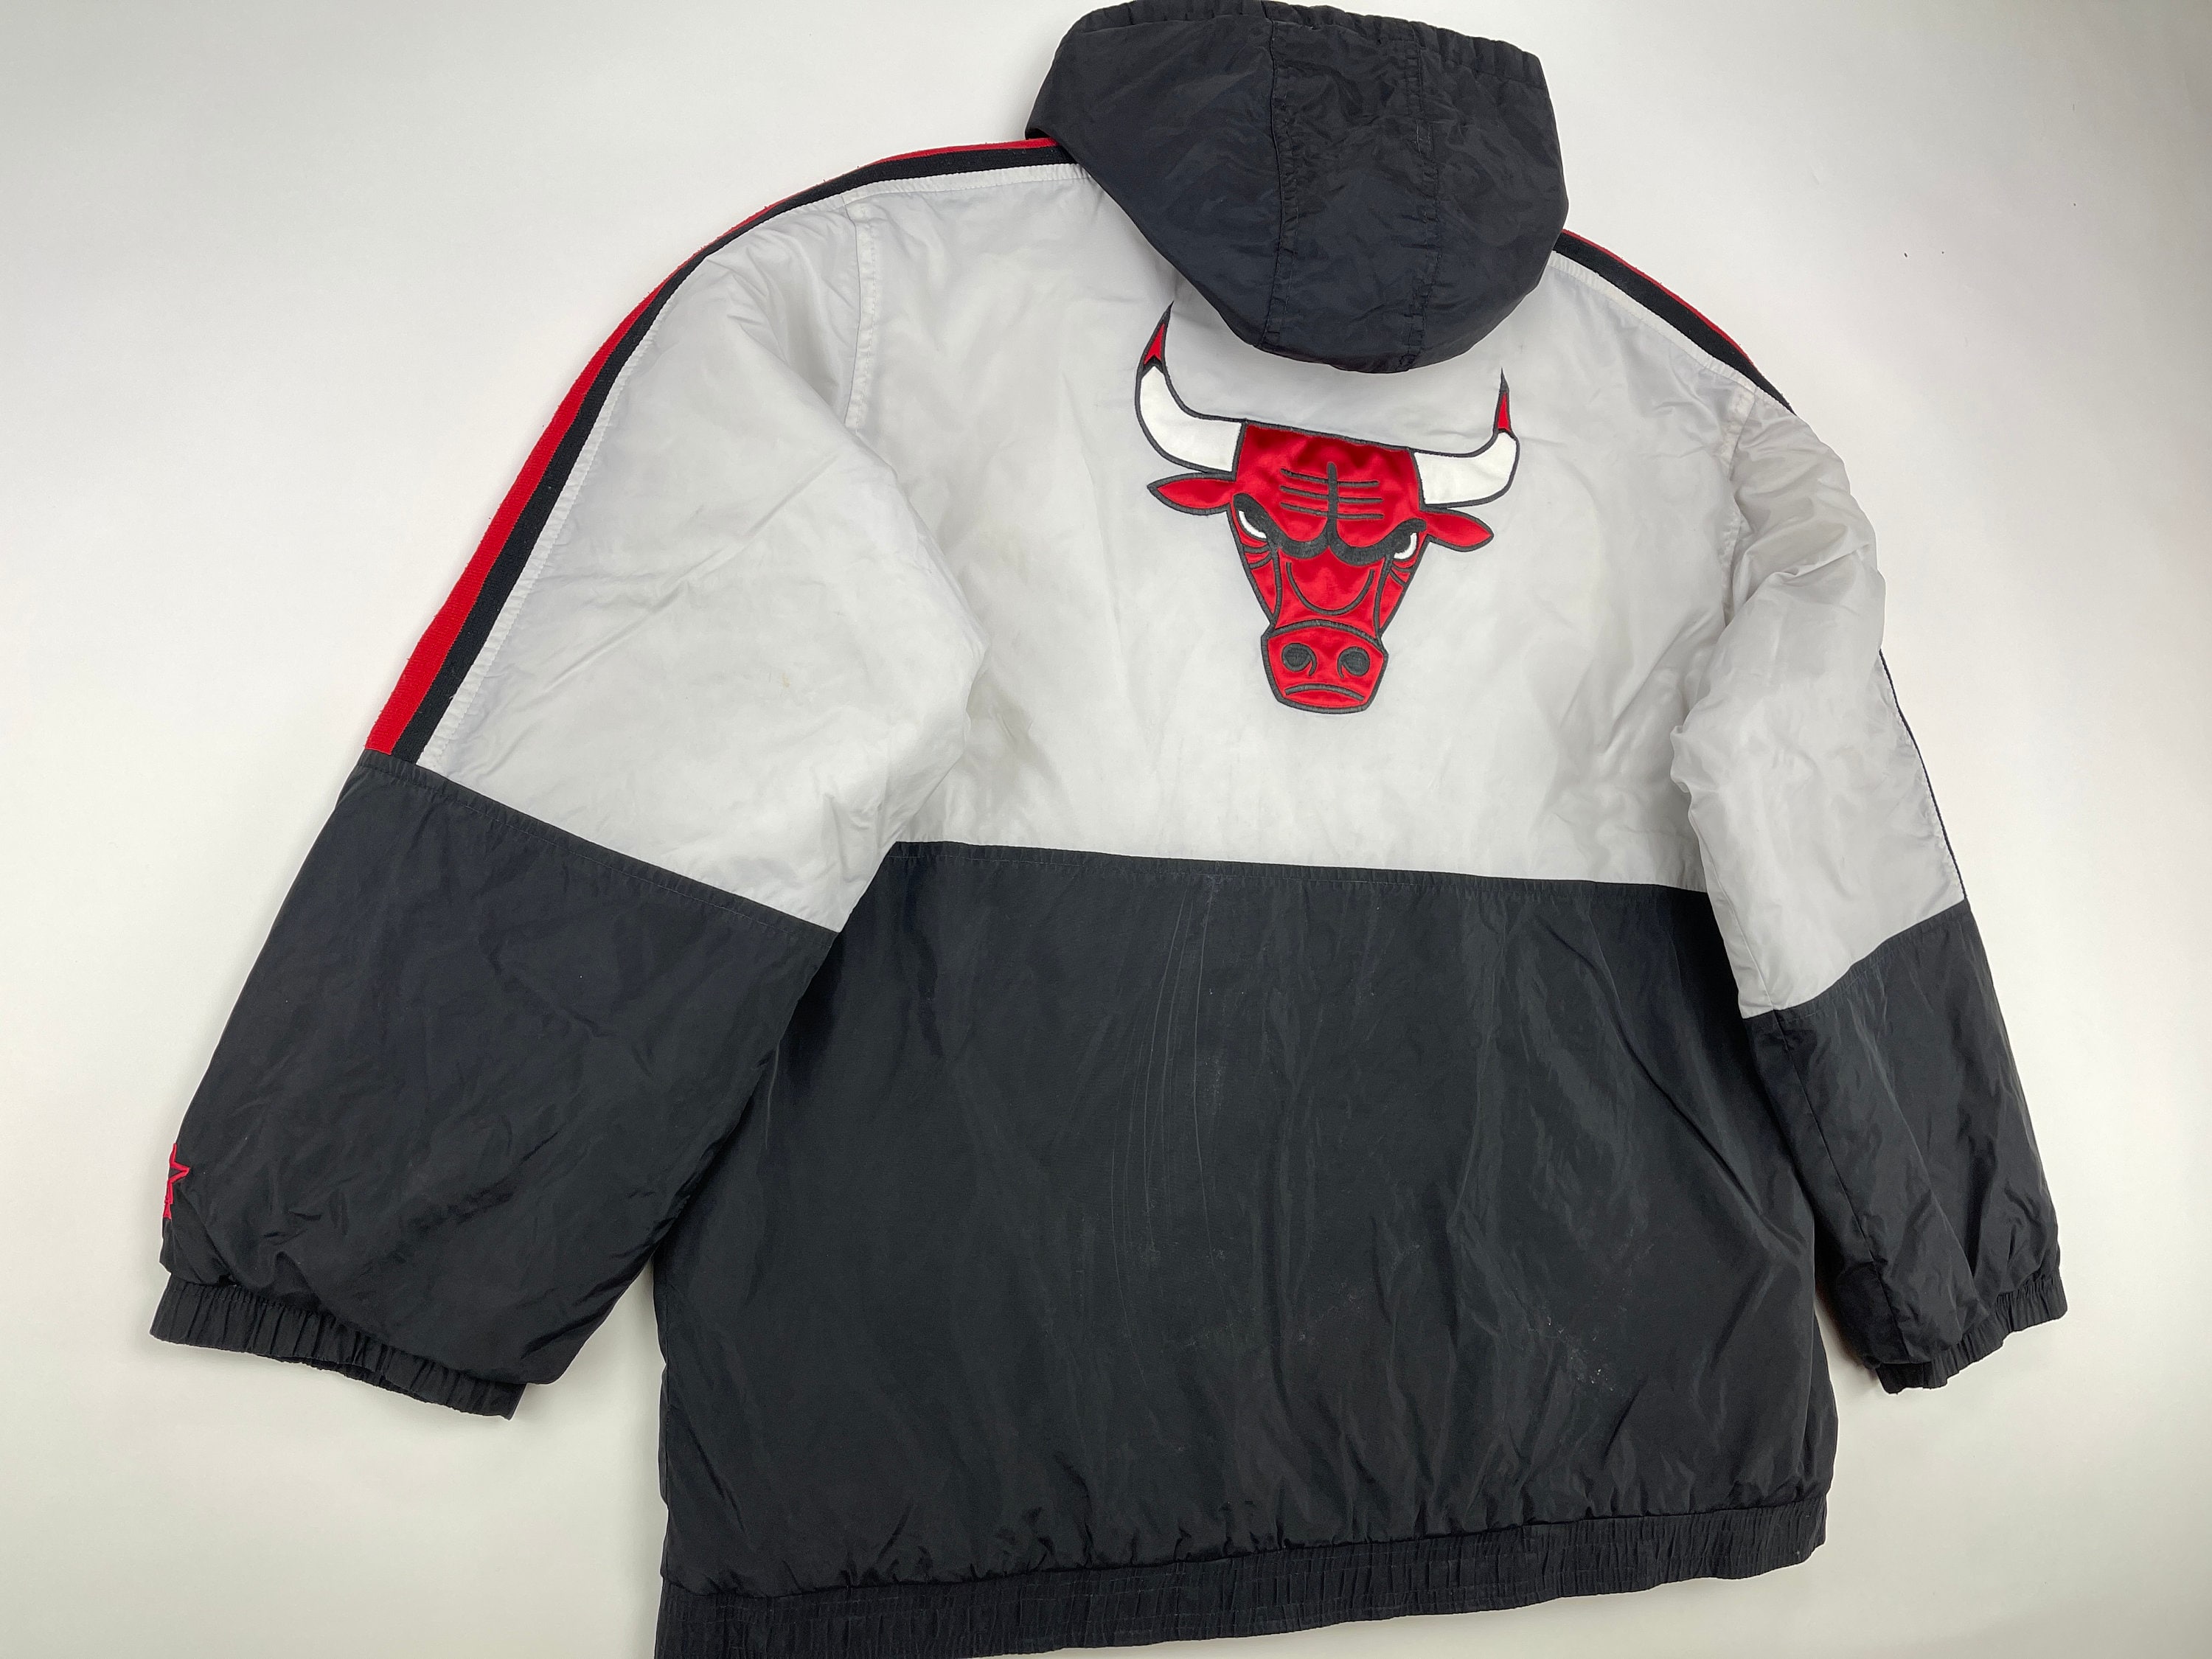 New Era NBA Chicago Bulls chain stitch full-zip hoodie in black